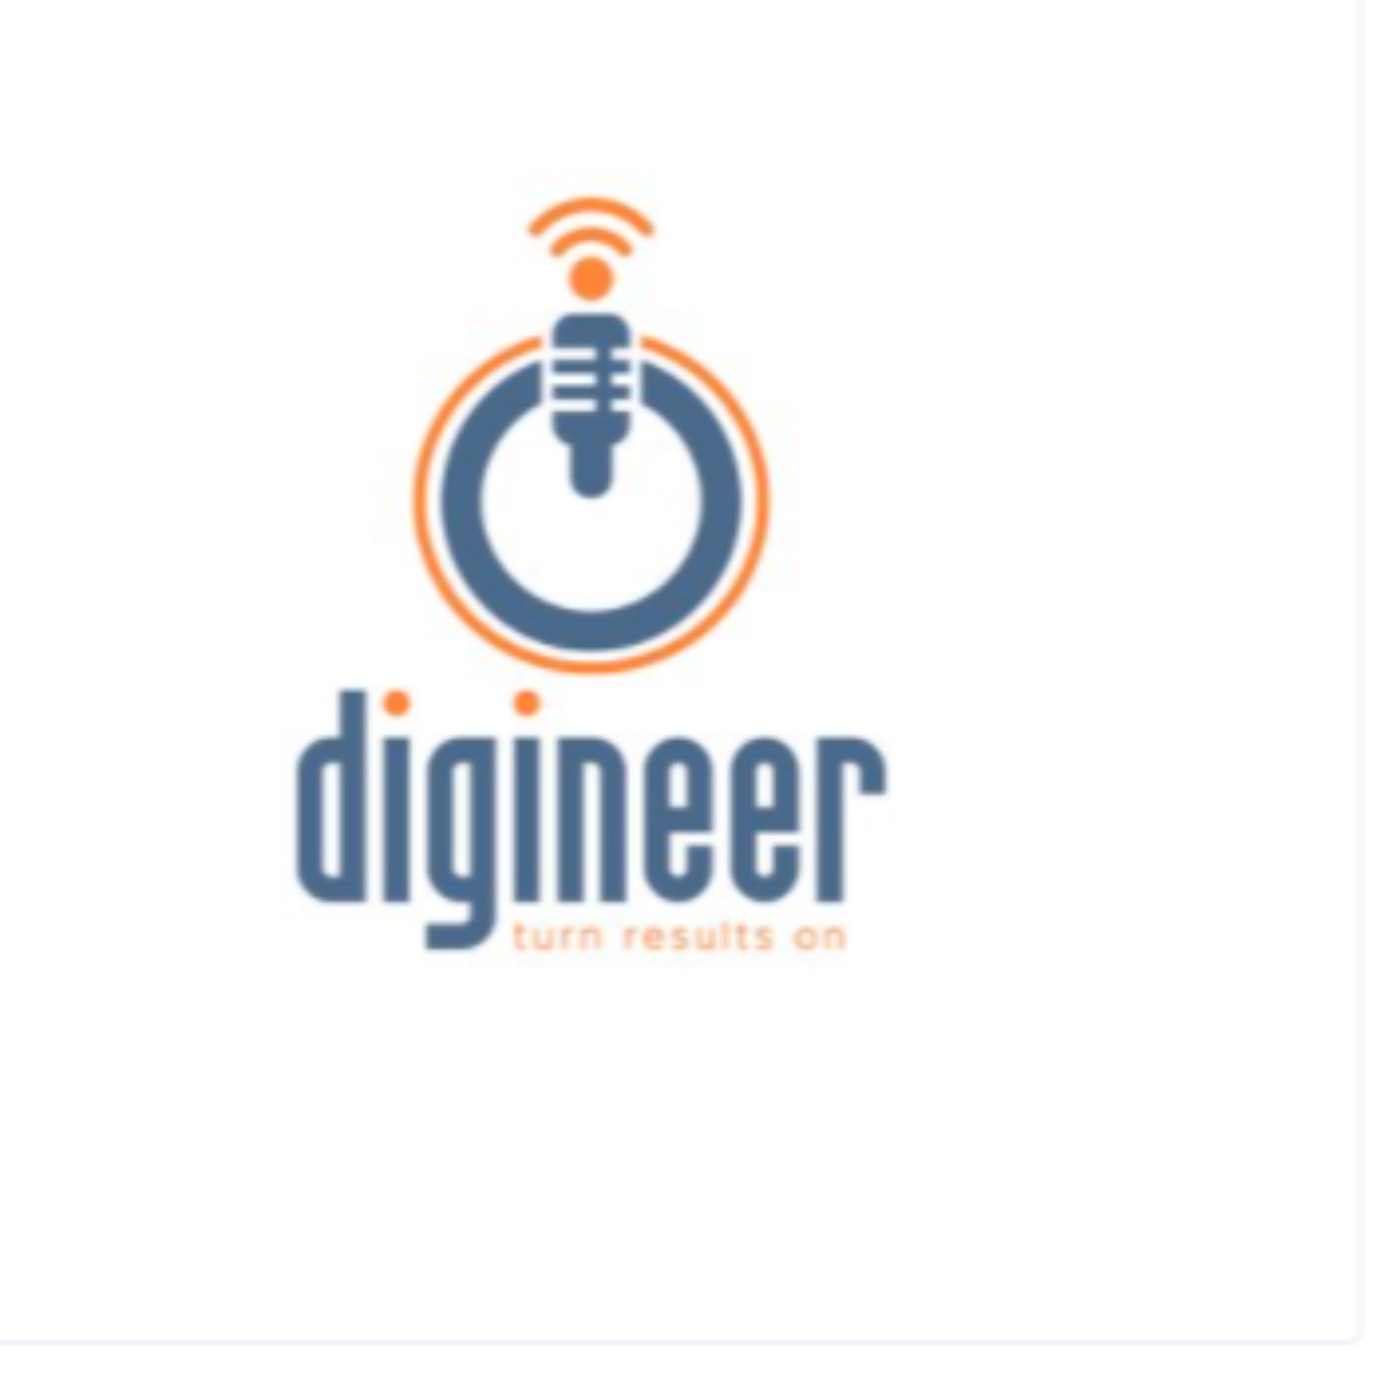 Digineer Presents: Recruiting - Impress Towards Action